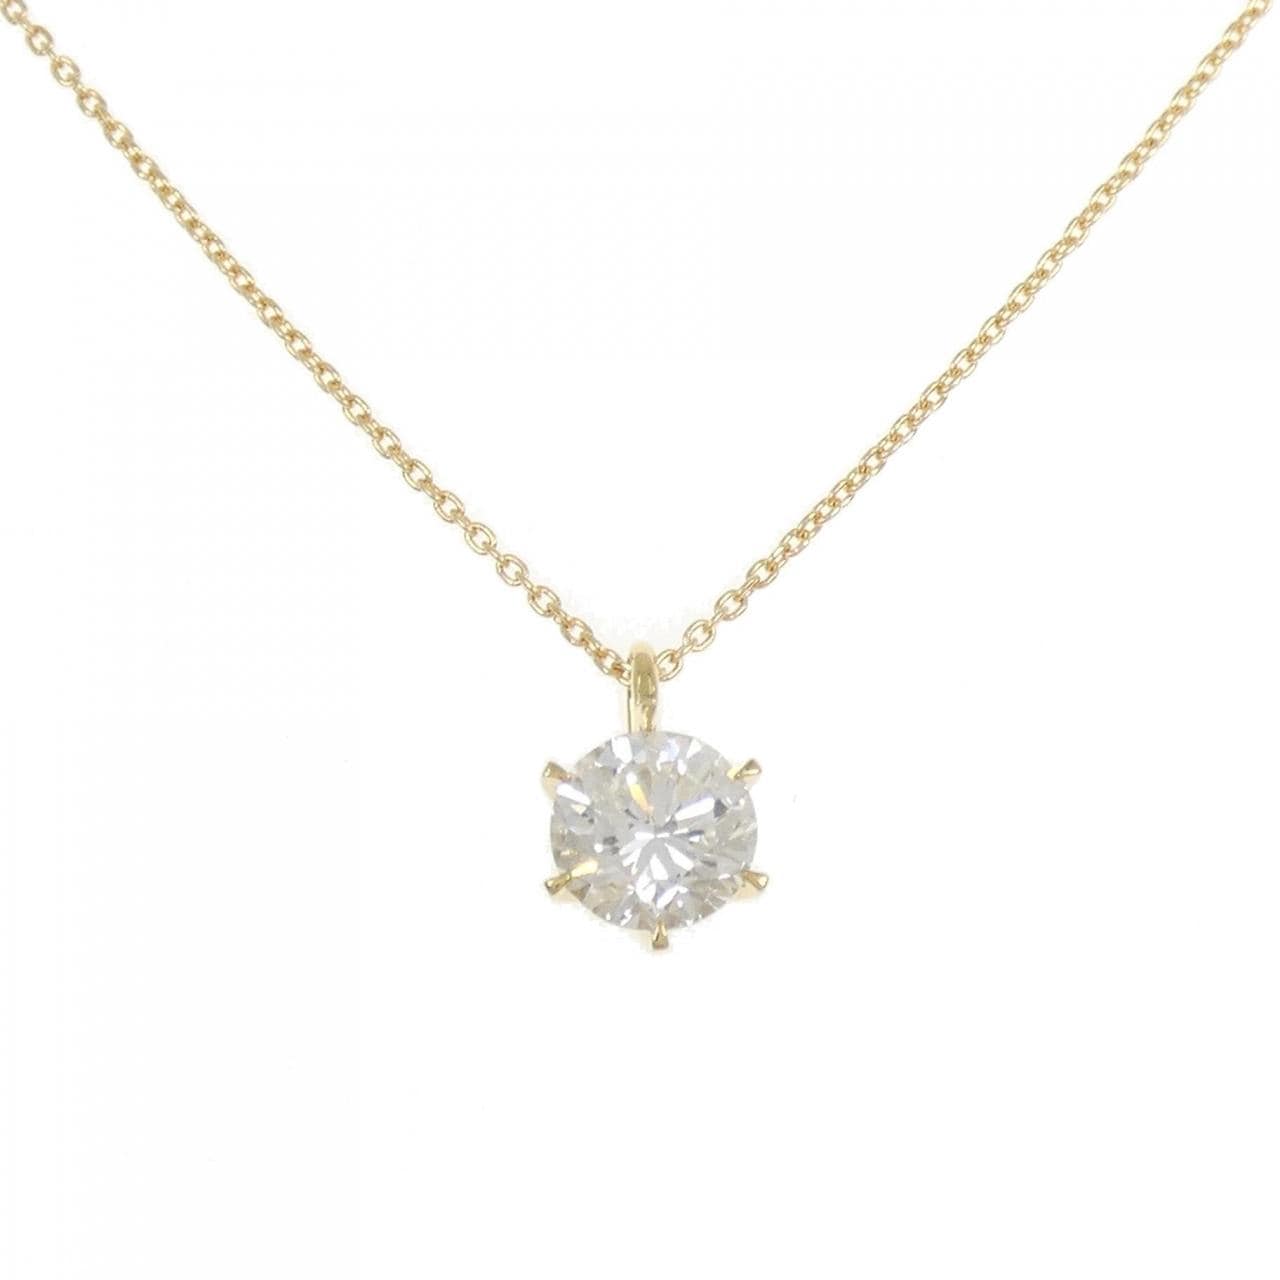 [Remake] K18YG Diamond Necklace 2.01CT H I1 Good